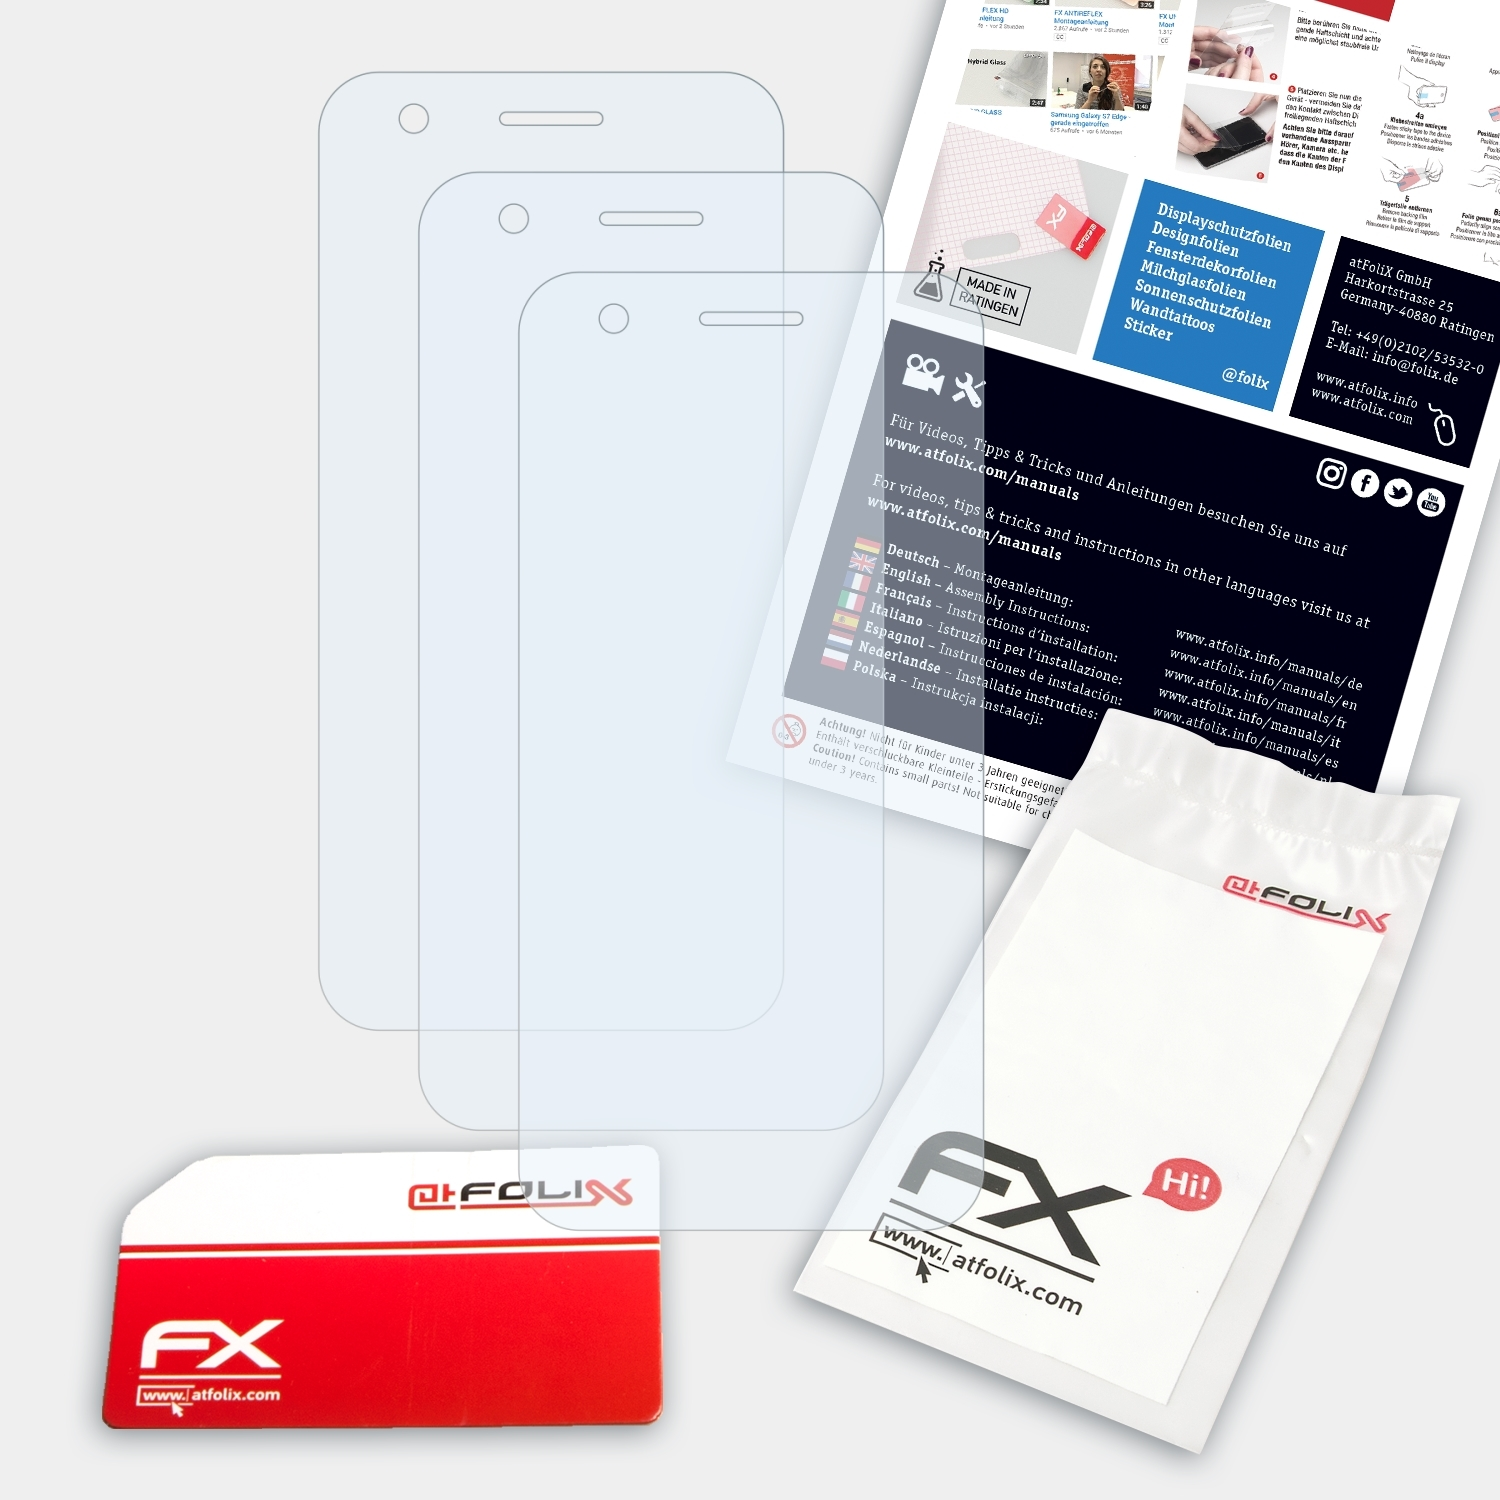 3x ATFOLIX Smart FX-Clear E8) Vodafone Displayschutz(für